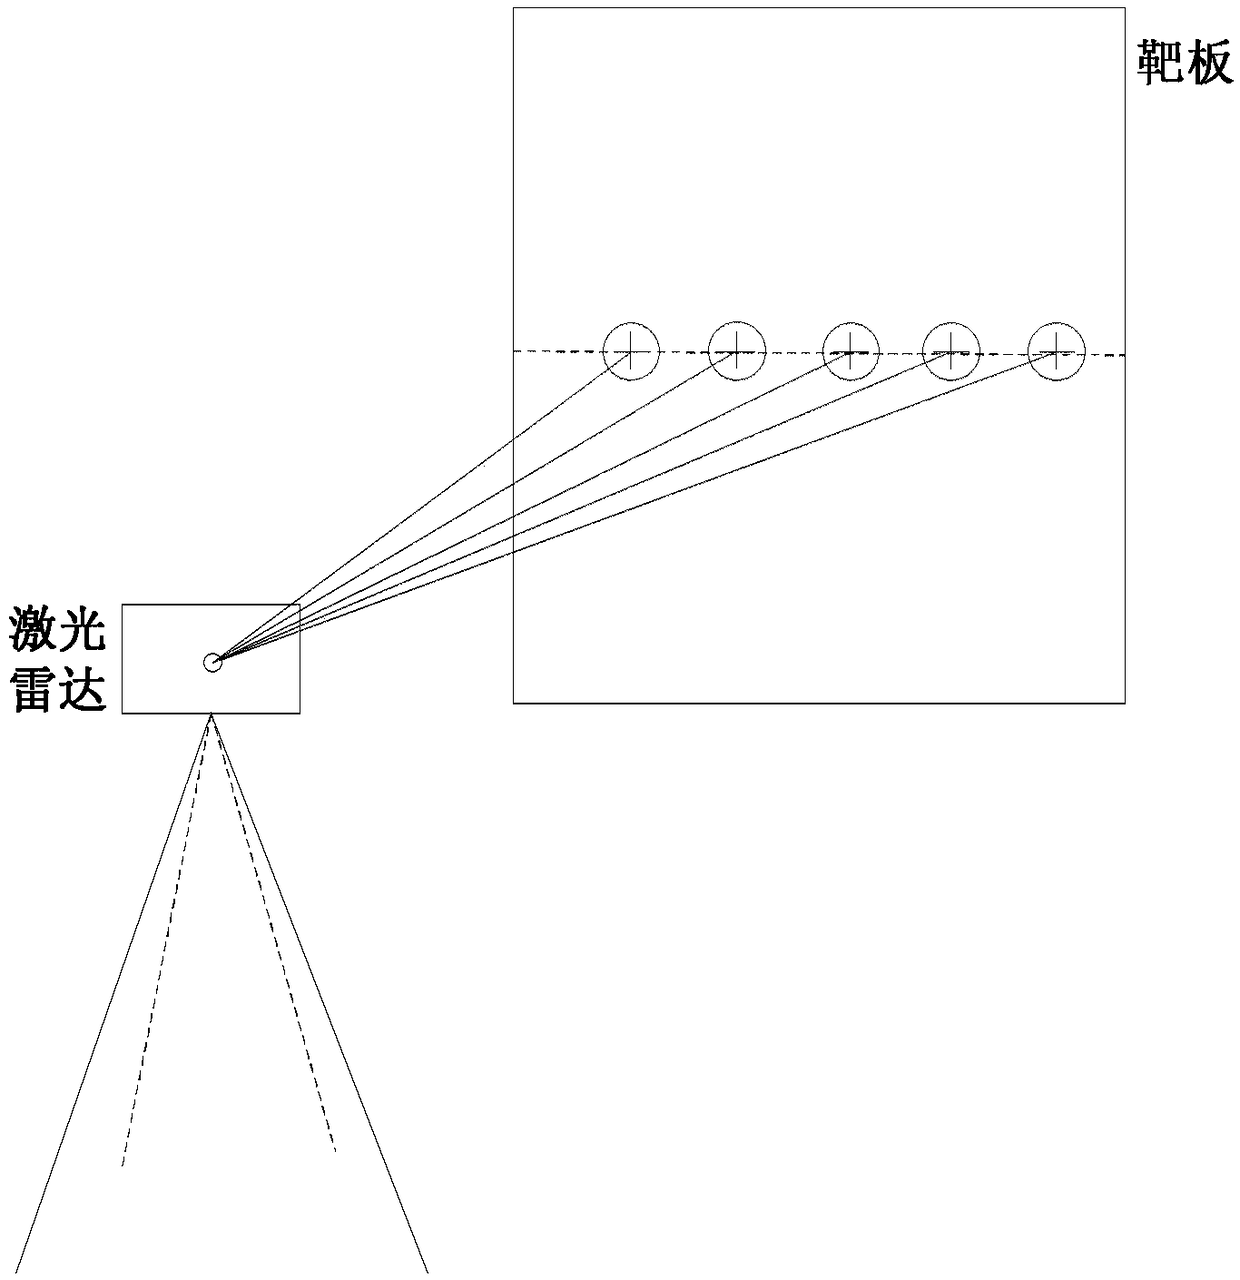 A method for non-uniformity correction of array push-broom laser radar ranging